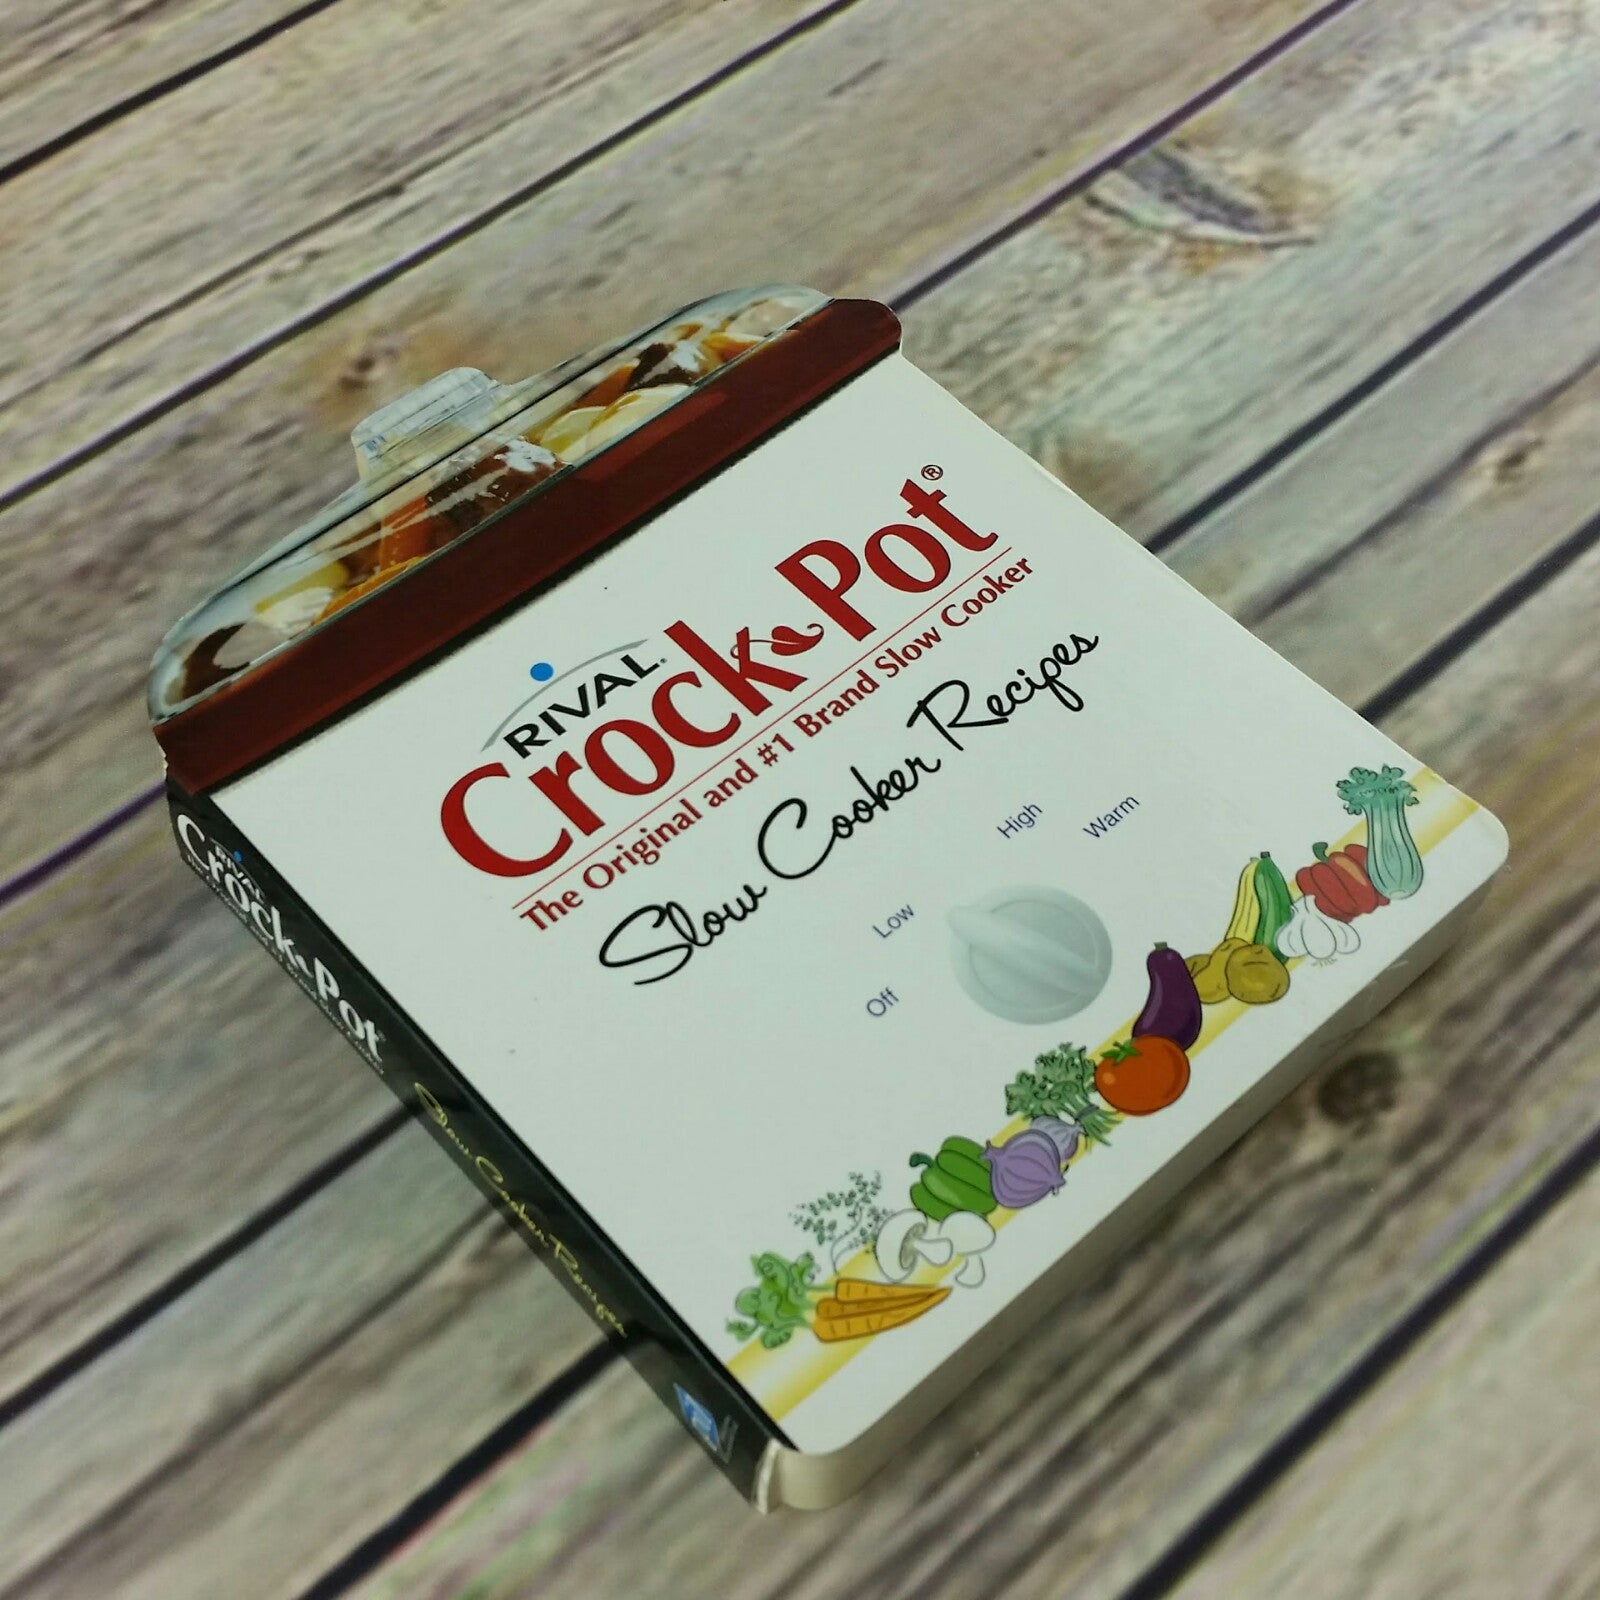 Crock Pot Slow Cooker Cookbook Recipes 2005 Meats Soups Desserts Drinks - At Grandma's Table